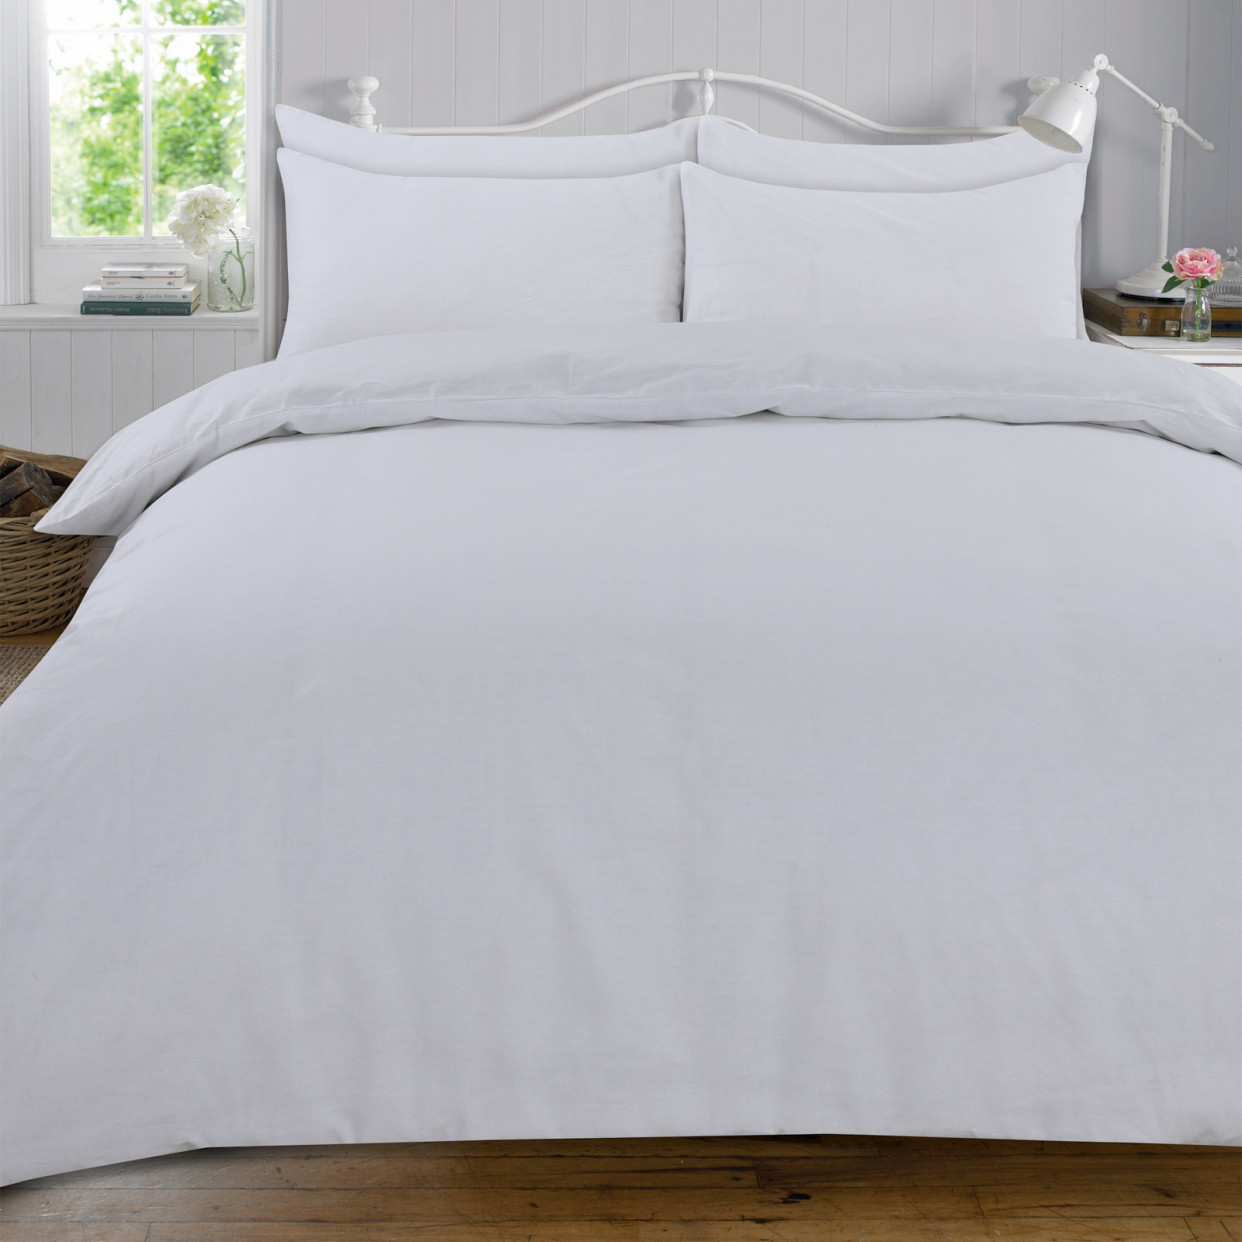 Highams Plain 100% Cotton Complete Duvet Cover Pillowcase Sheet Set, White - Super King>